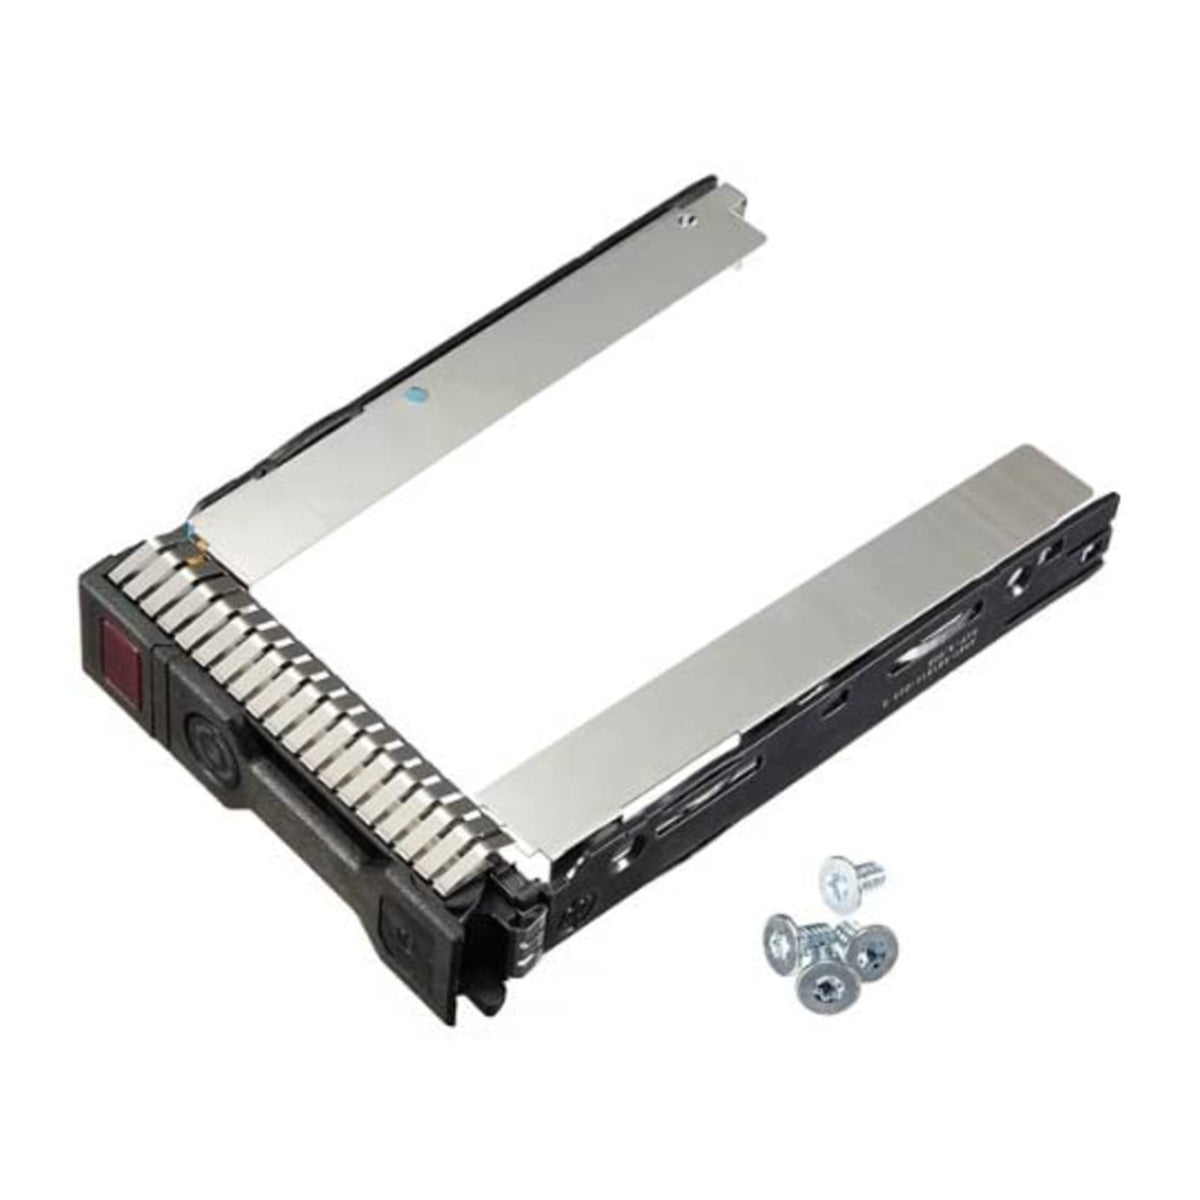 MECO CO.,LTD    3.5" Tray Caddy FOR HP 651314-001 Proliant ML310 ML350e - for G8-G10 SAS SATA Hard Drive   - (651314-001-2) New - OEM